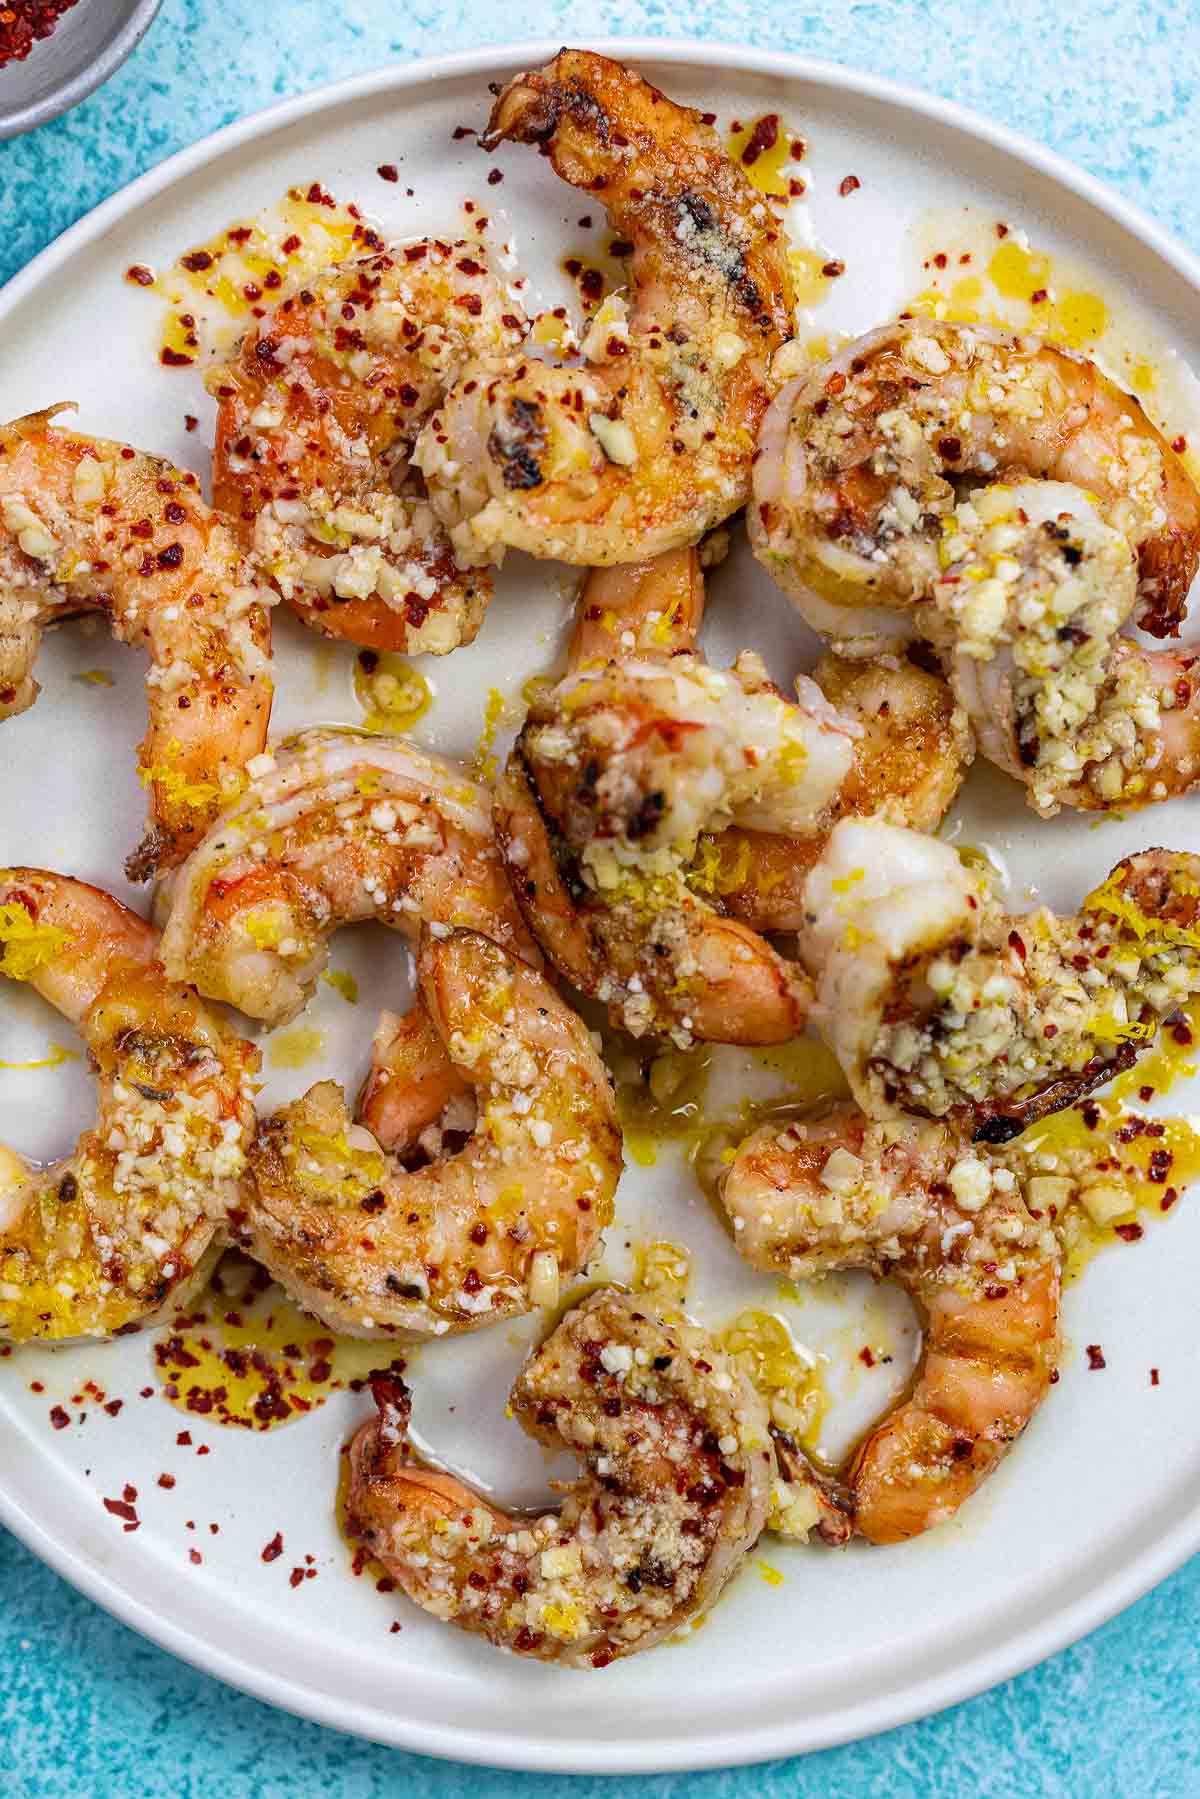 https://www.themediterraneandish.com/wp-content/uploads/2022/07/garlic-parmesan-shrimp-6.jpg